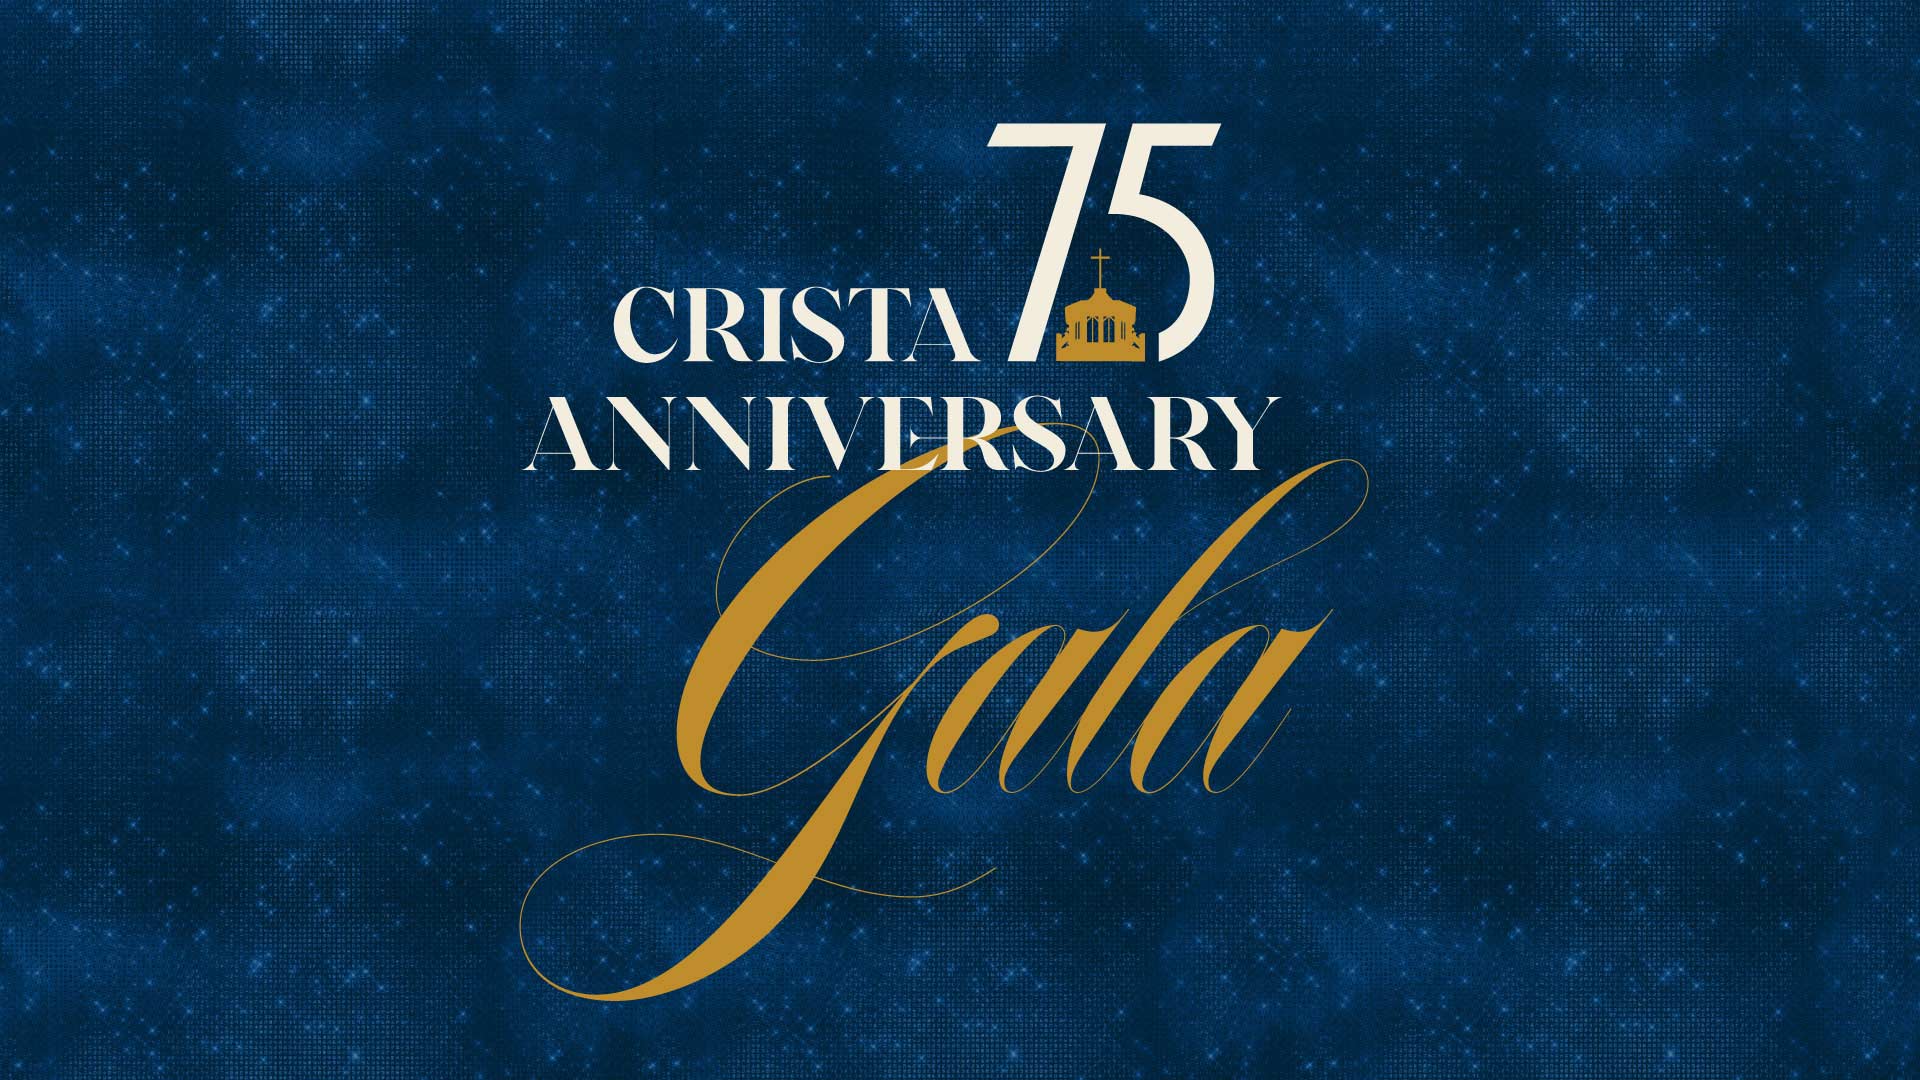 CRISTA 75th Anniversary Gala Image